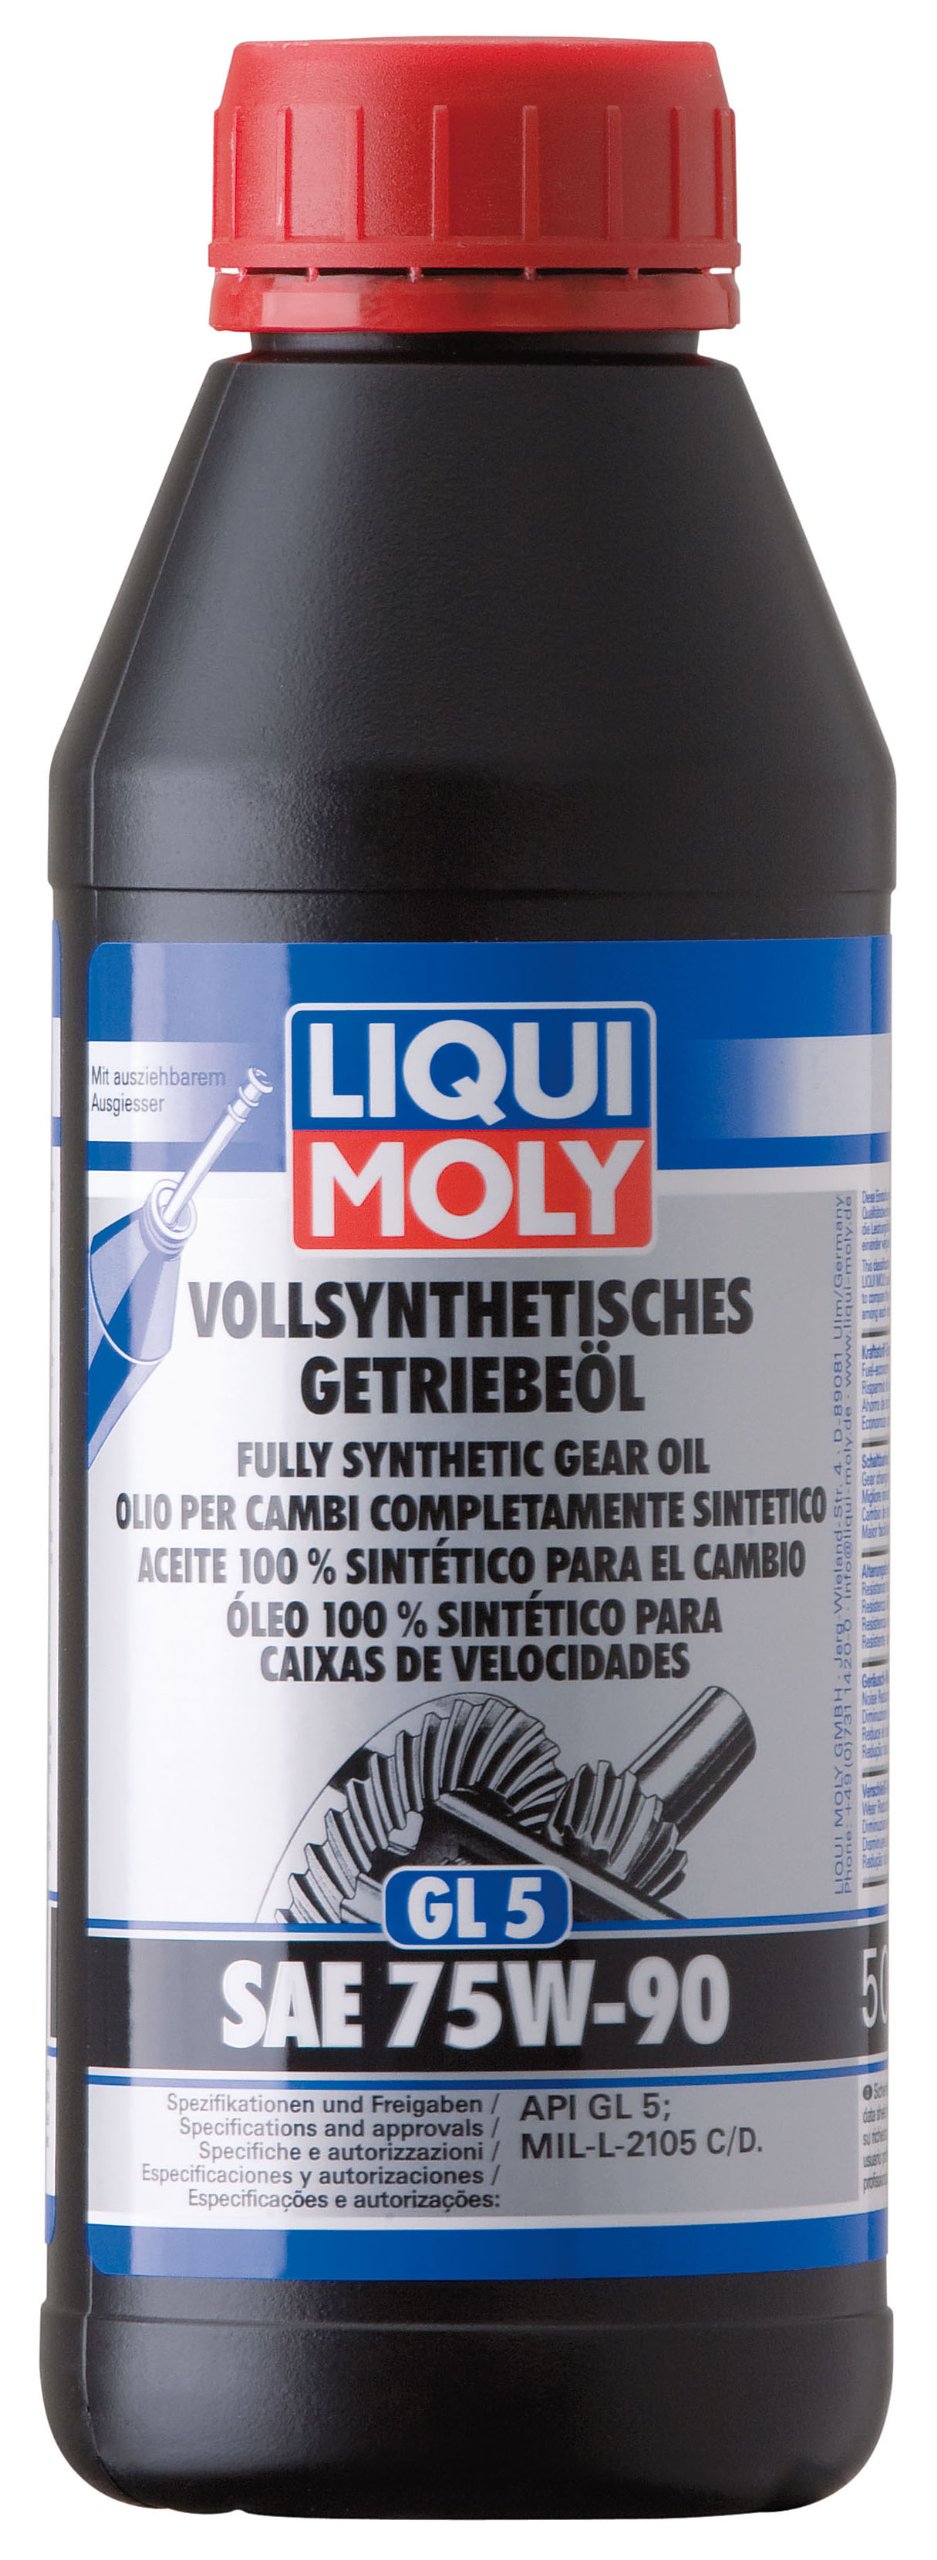 LIQUI MOLY Vollsynthetisches Getriebeöl (GL5) SAE 75W-90 | 500 ml | Getriebeöl | Hydrauliköl | Art.-Nr.: 1413 von Liqui Moly